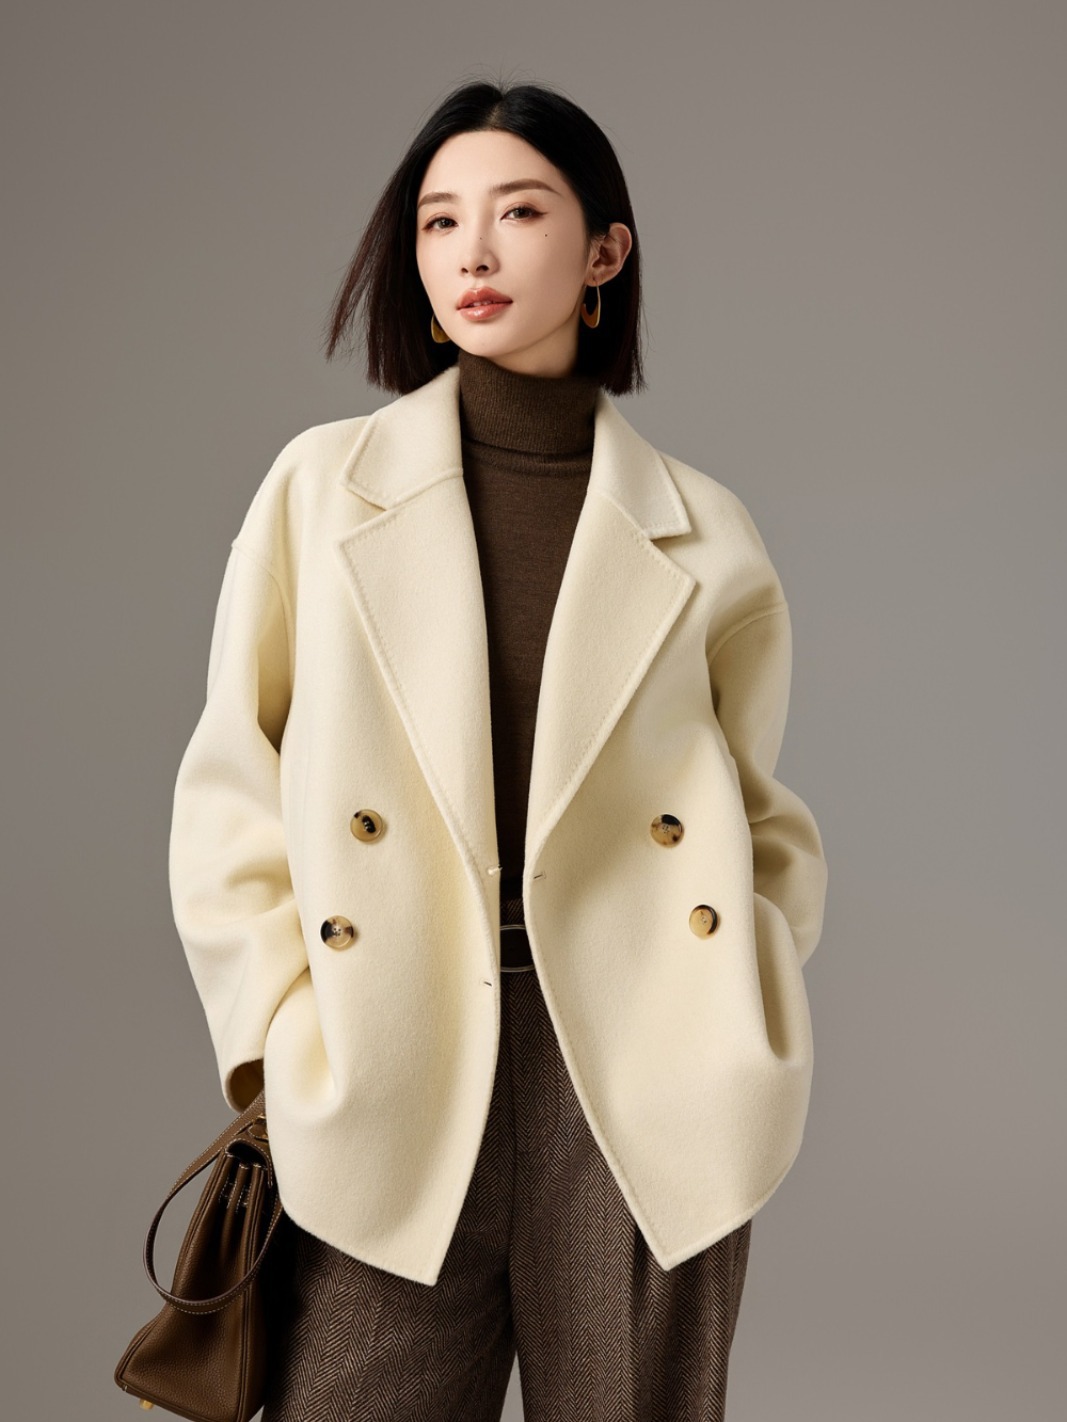 50 Cashmere 50 Wool Delicate and Comfortable Reversible Cashmere Coat Women's High Sense Loose Wool Coat Short Women's